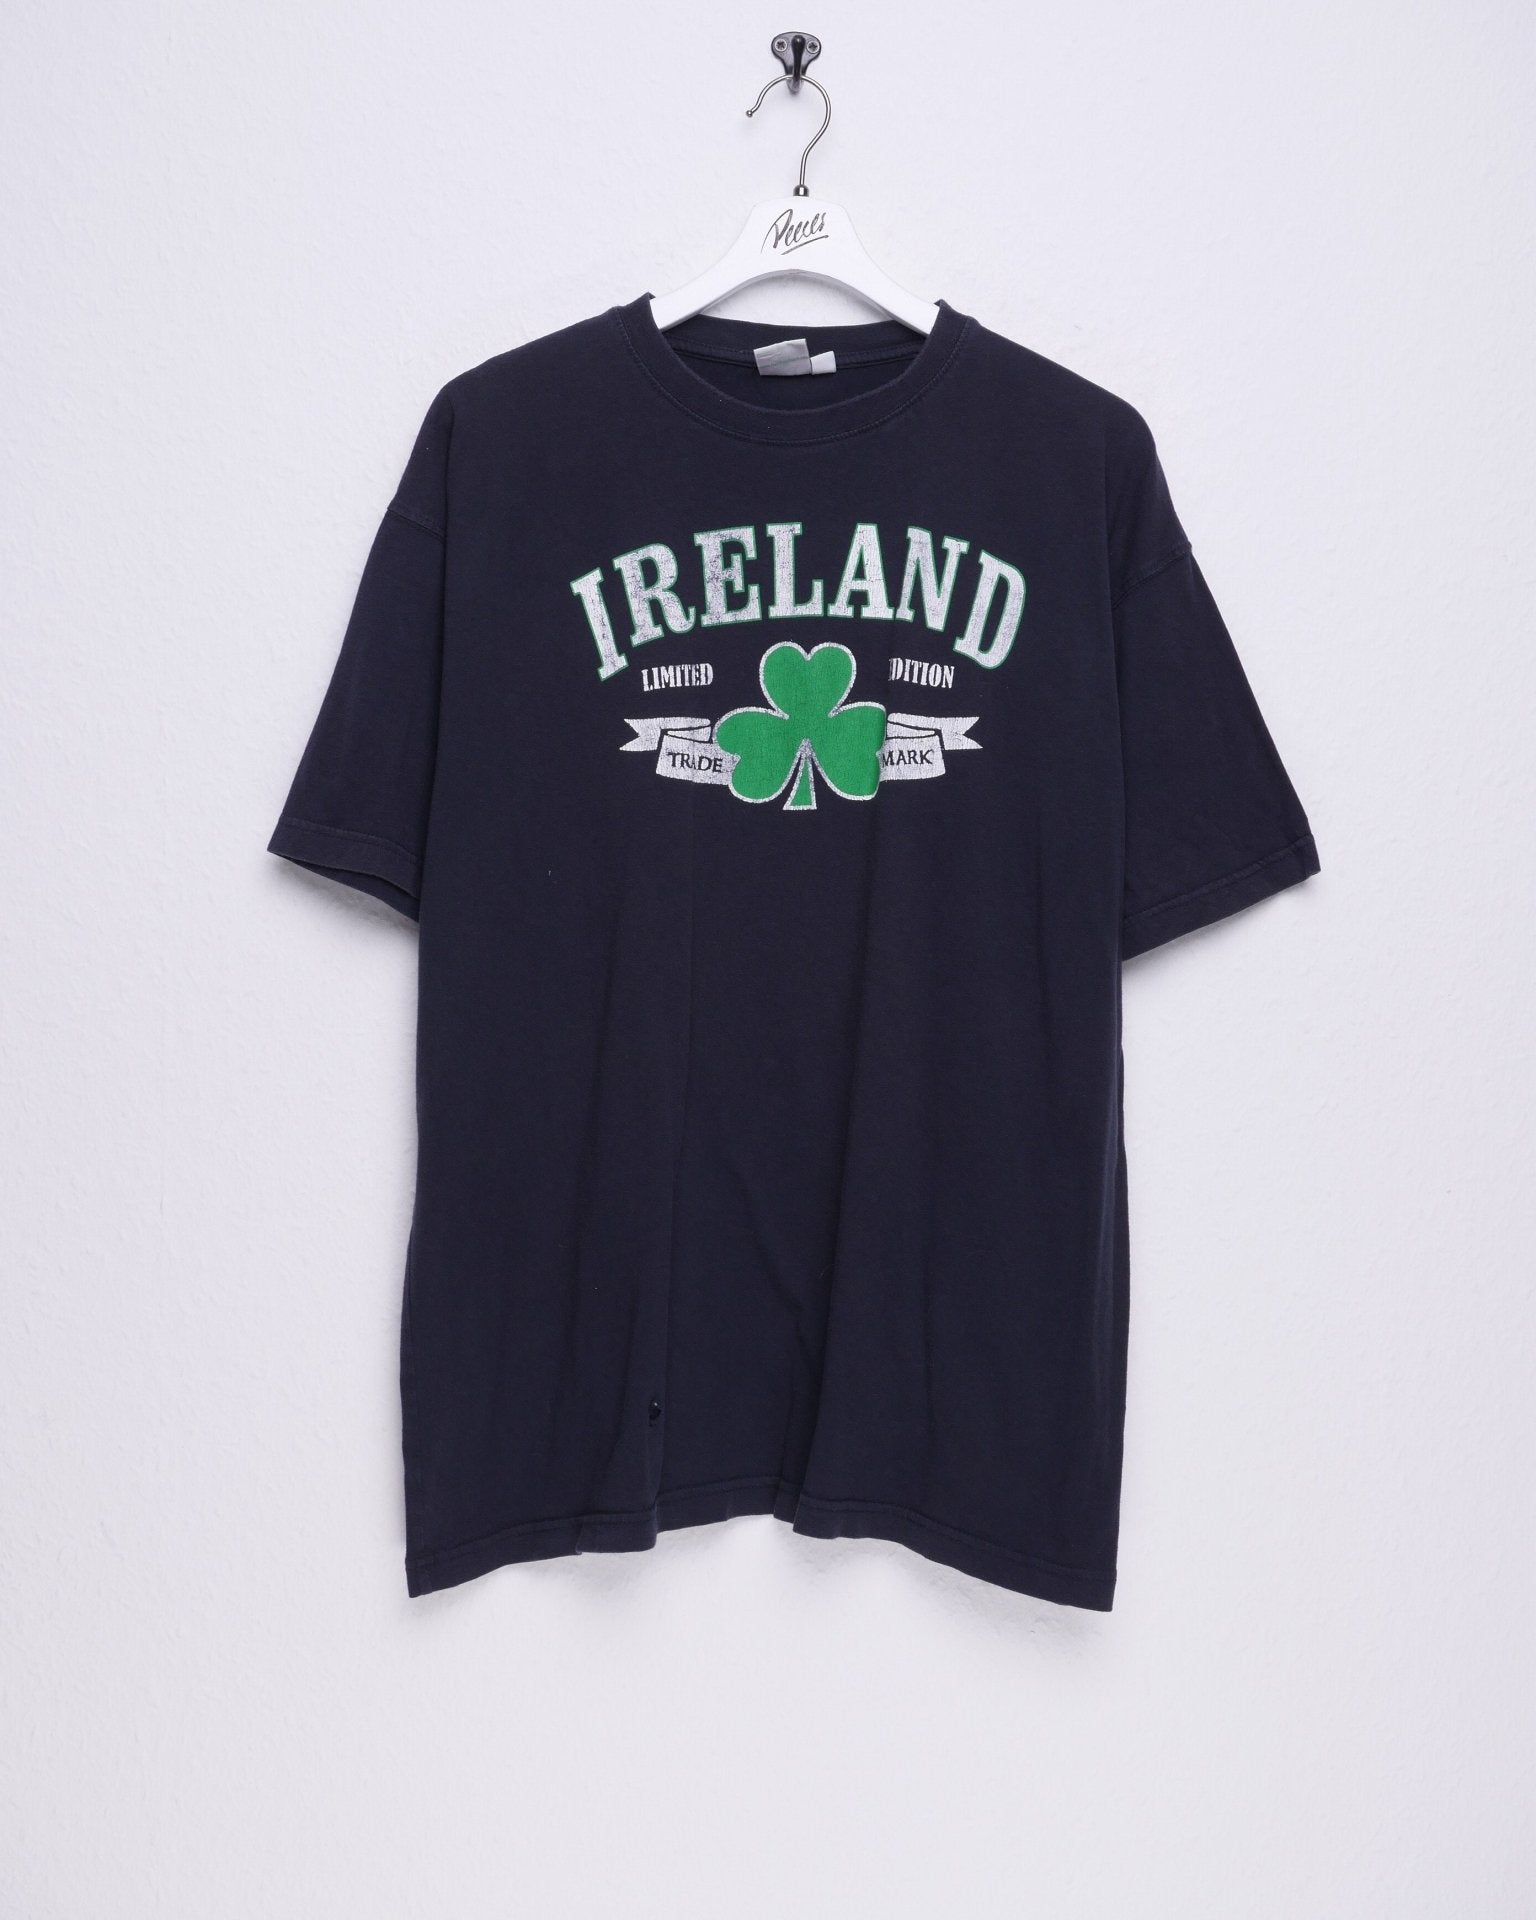 'Ireland' printed Graphic black Shirt - Peeces